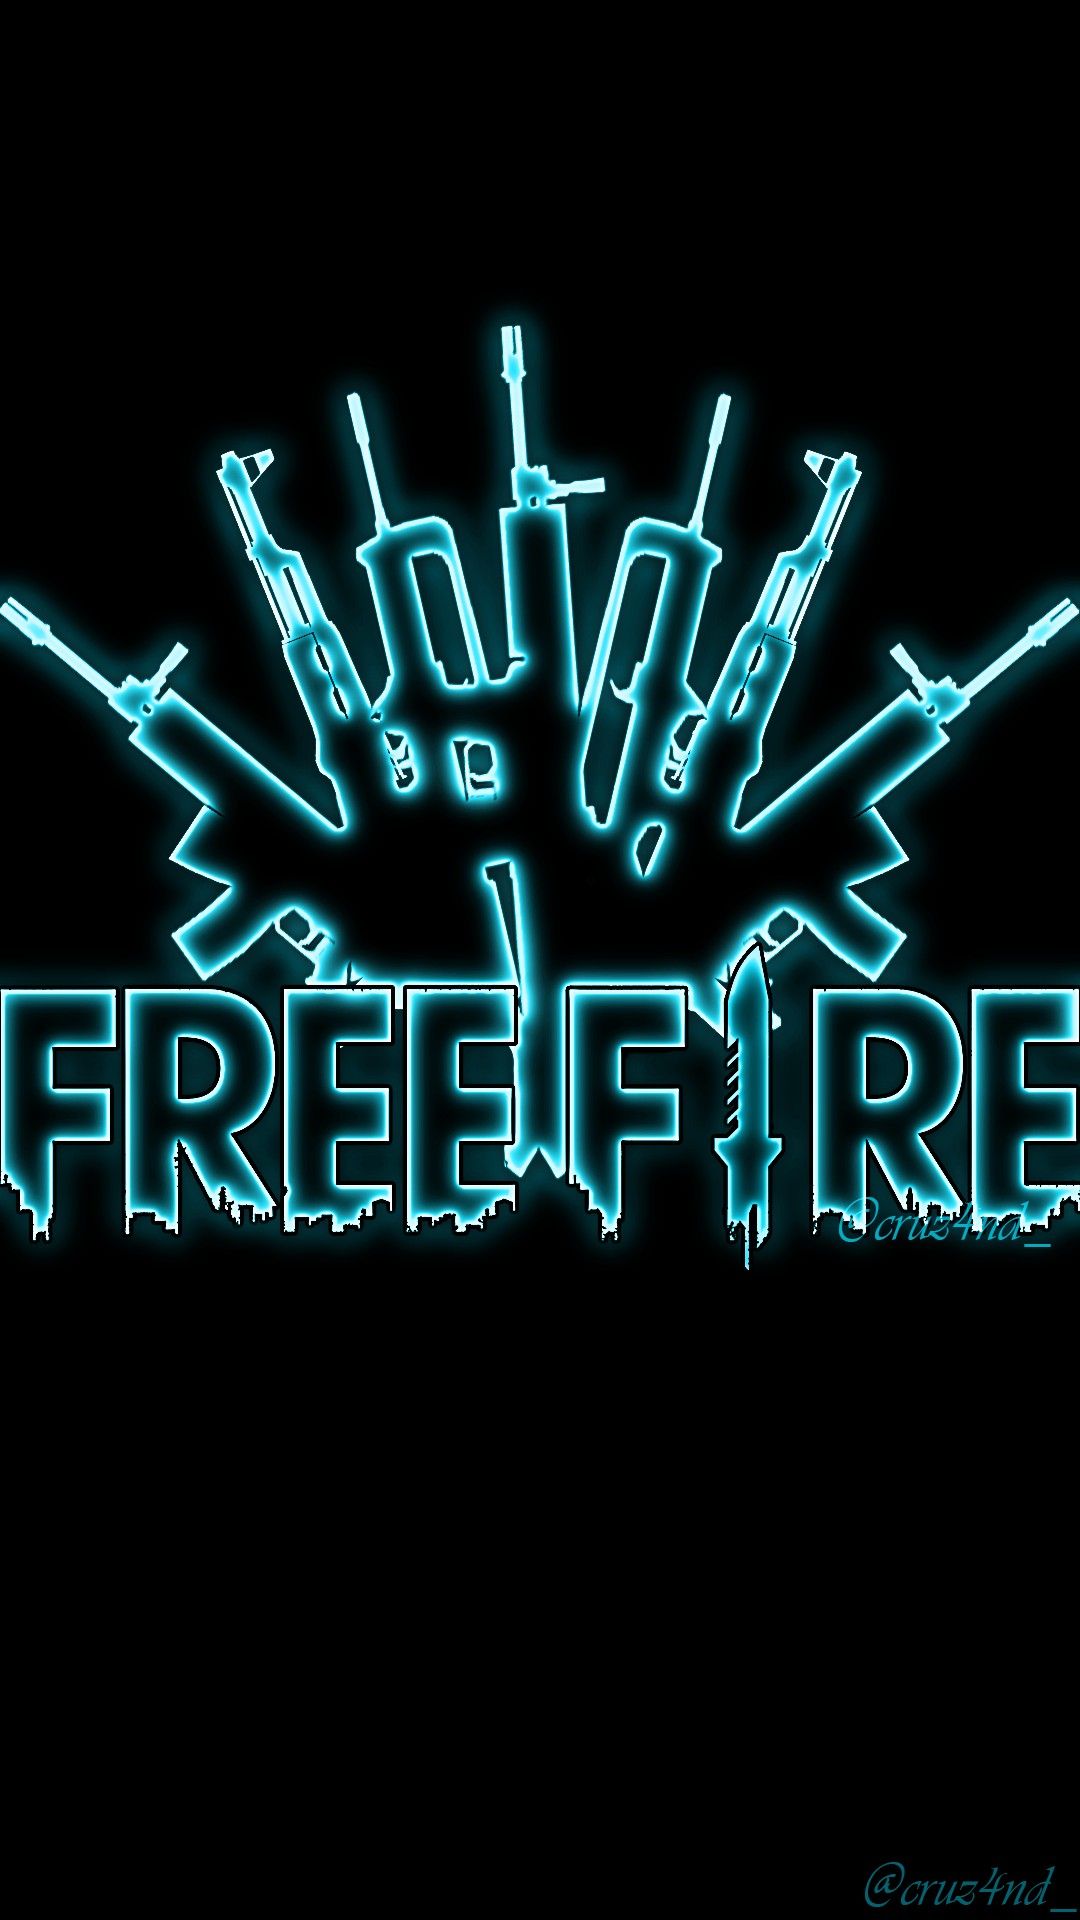 free fire. Photo editing tricks, Photo logo design, Simple background image